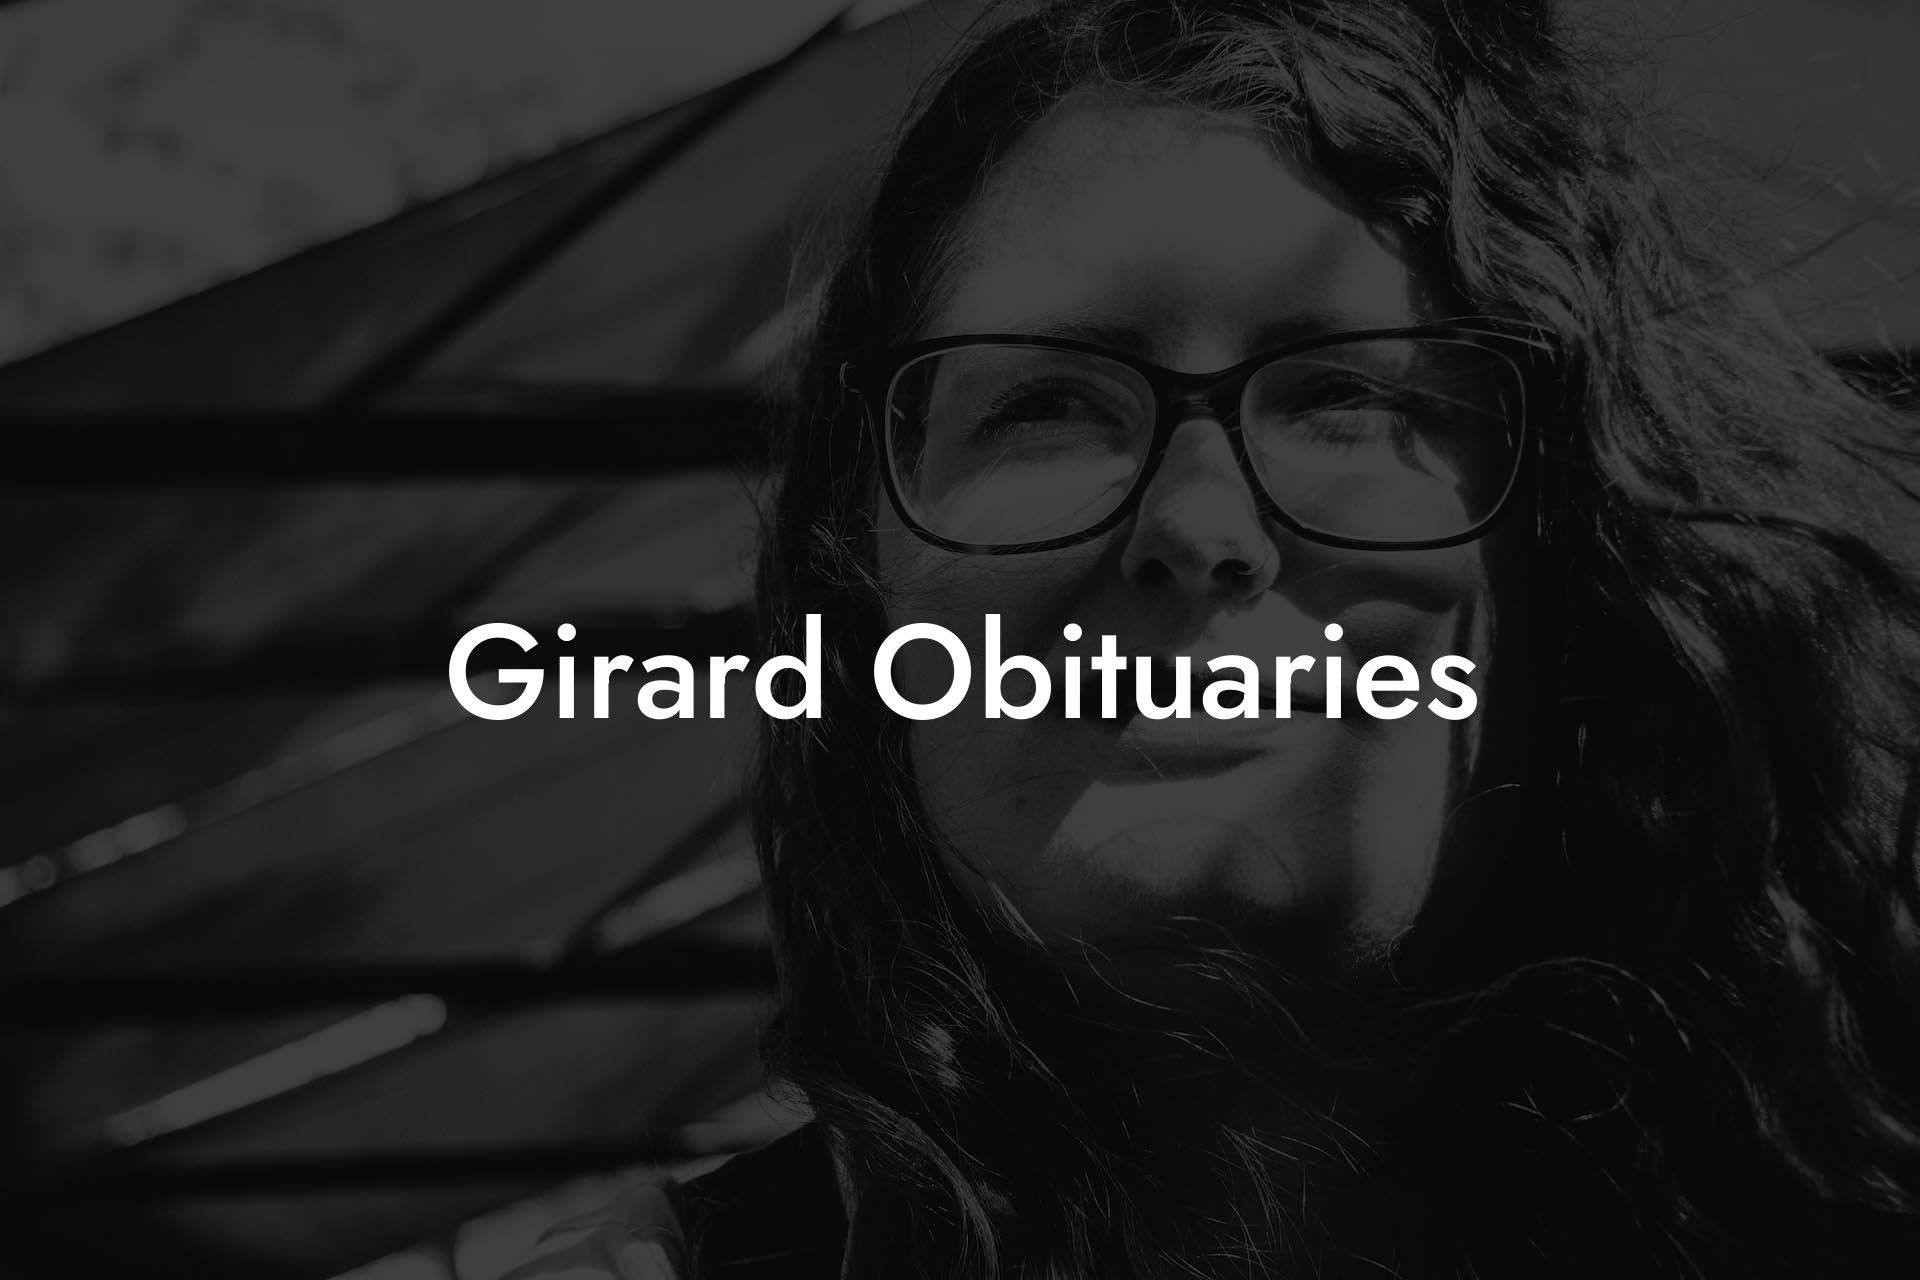 Girard Obituaries